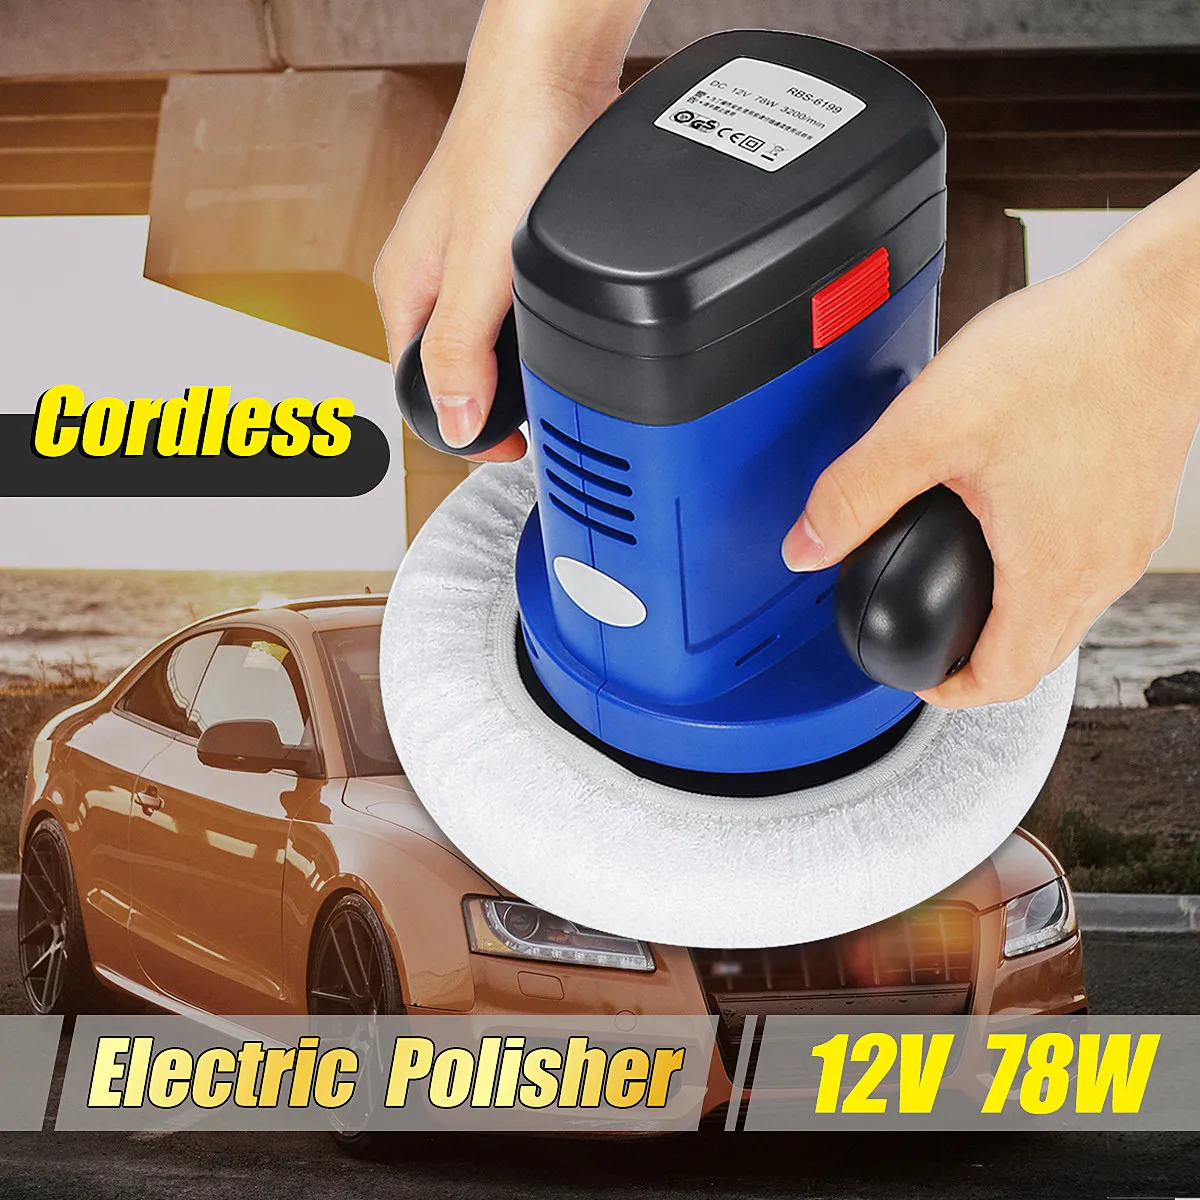 

12V 78W Car Polishing Mini Cordless Car Polisher Handheld Electric Cleaner Machine Waxing Polishing Tool Set Car Paint Care Tool